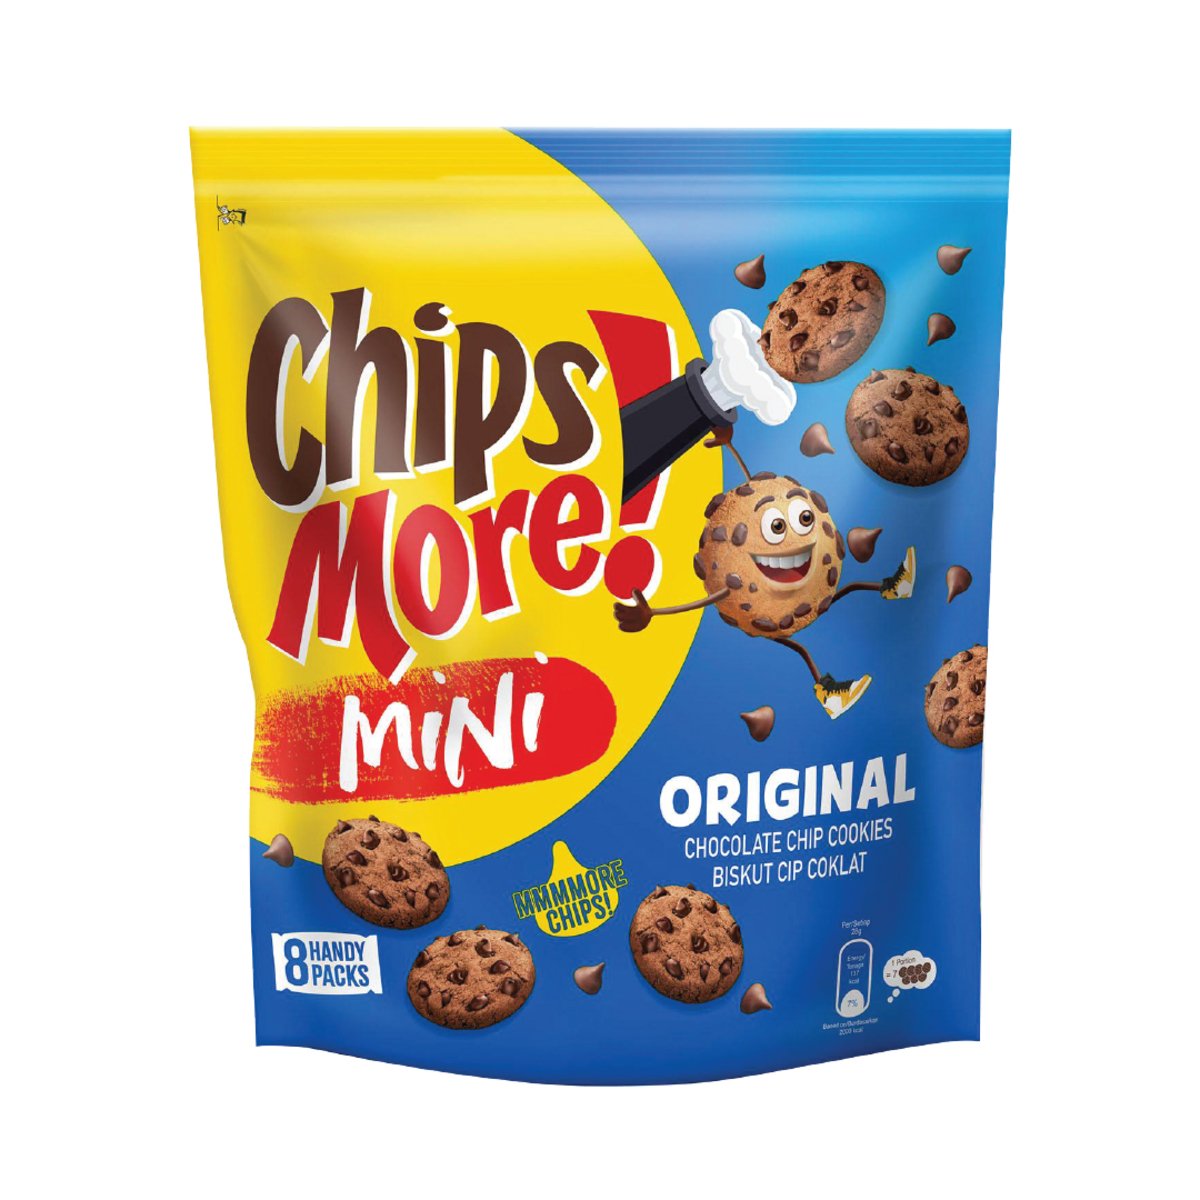 Chipsmore Original Mini Chocolate Chip Cookies 40.8g X 8sachets